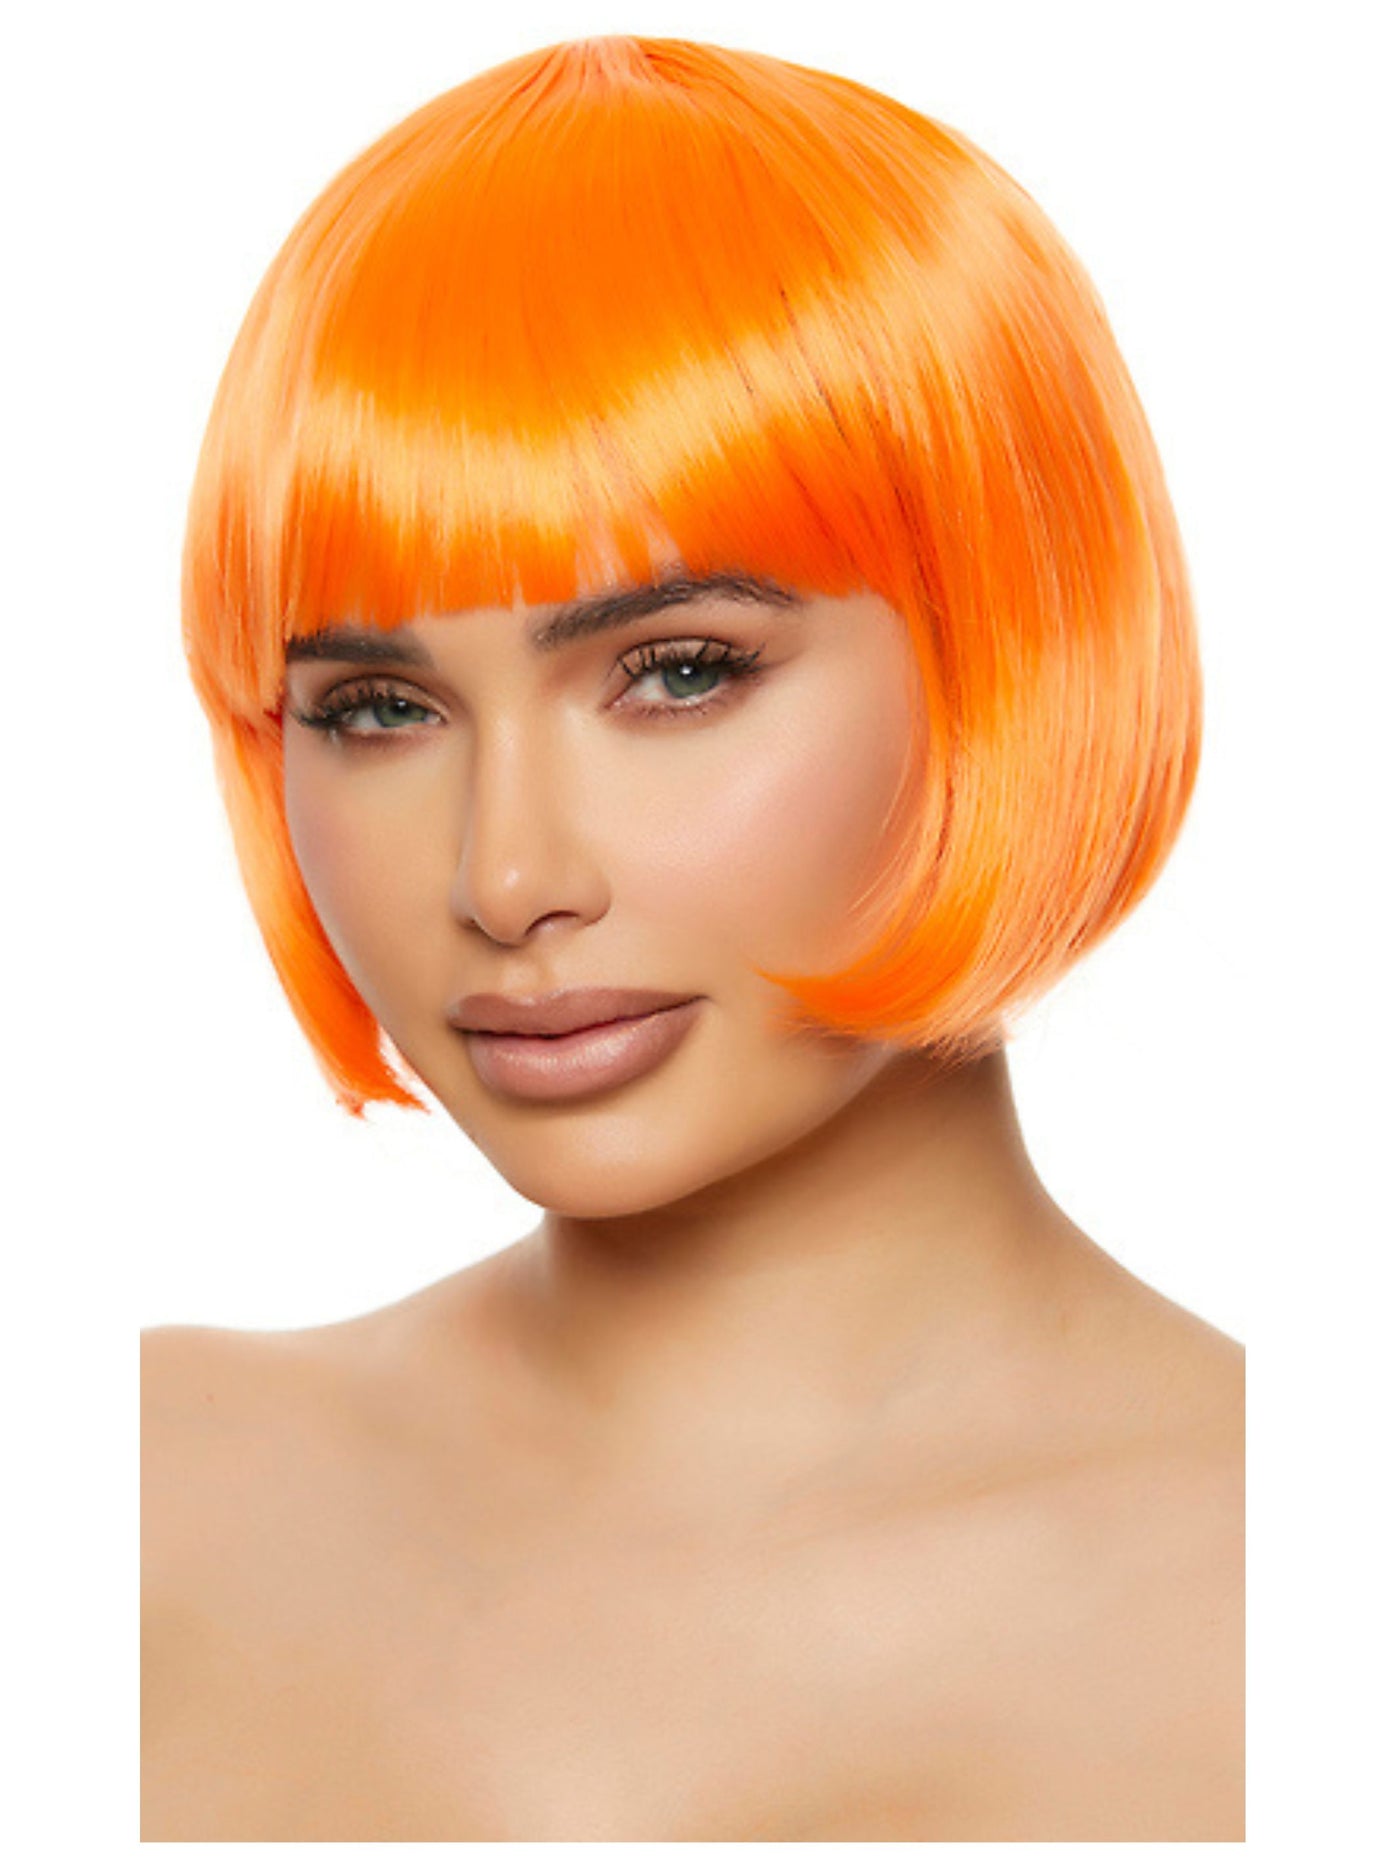 Neon Orange Bob Wig with Bangs